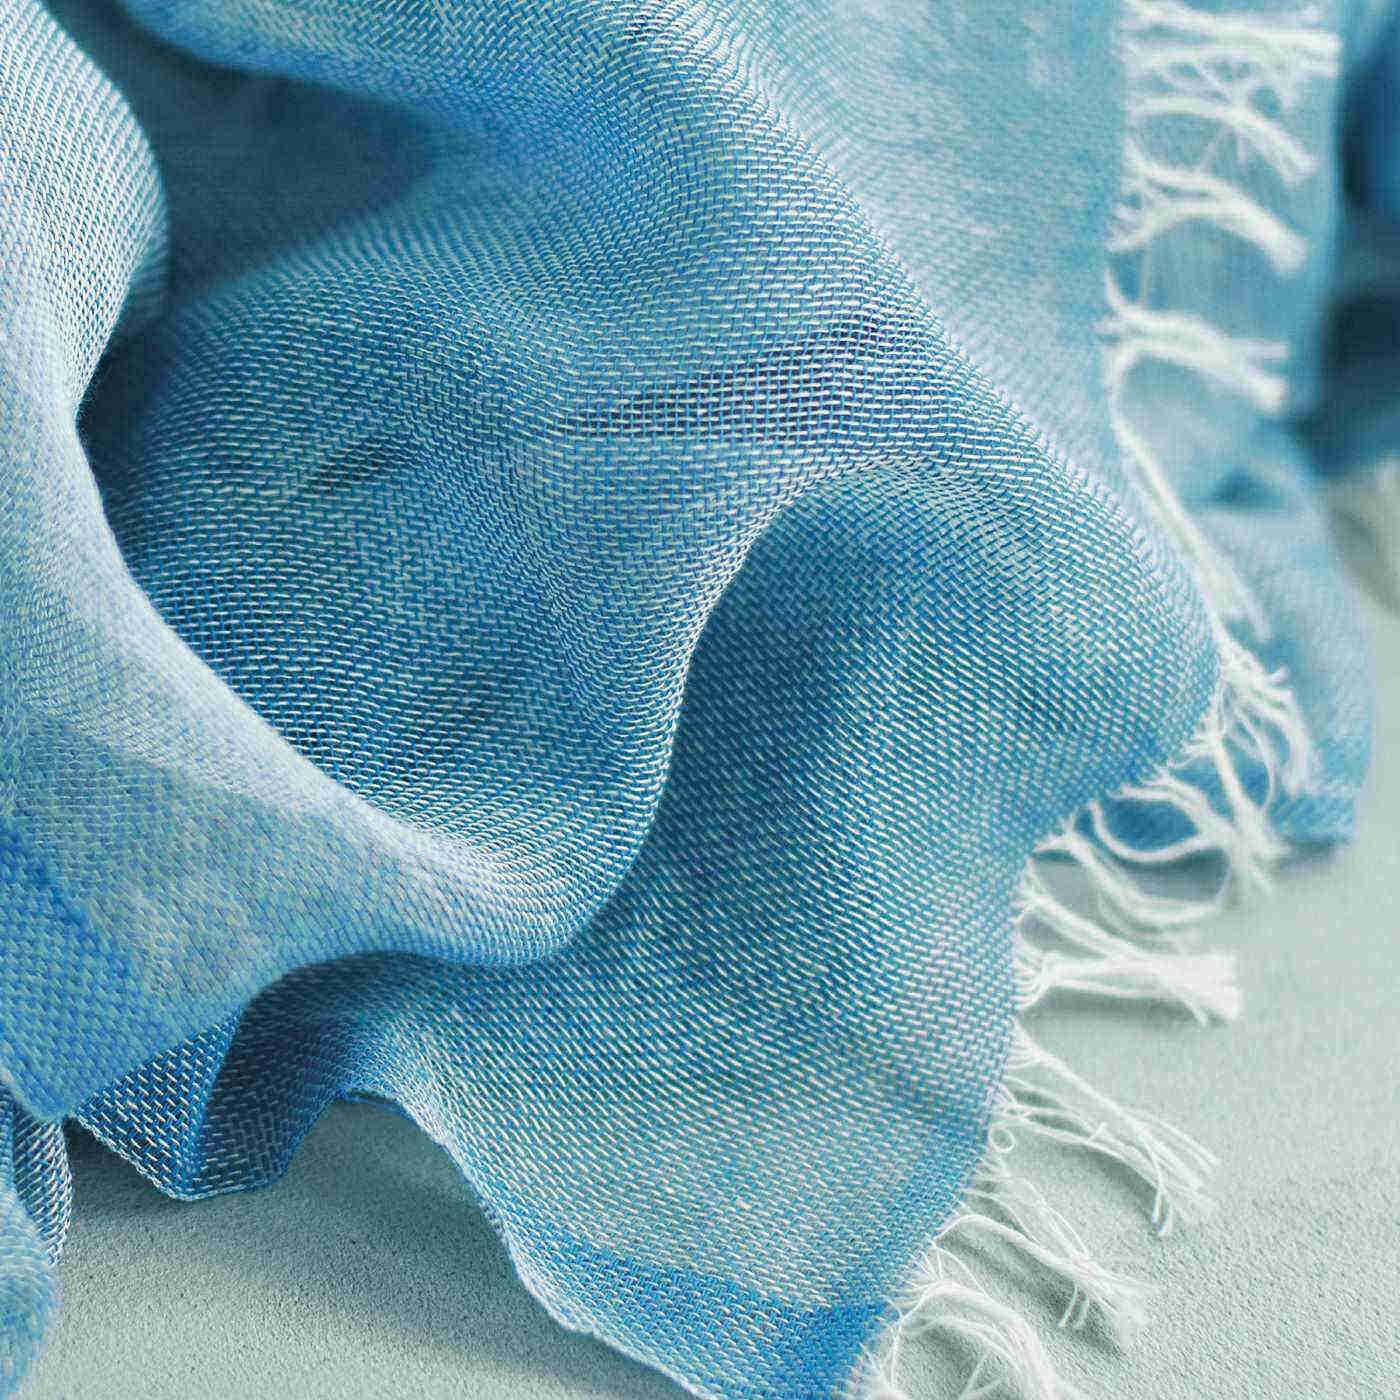 Real Stock|el:ment　奈良の笹田織物さんが織り上げる　軽やかでやわらかな着け心地　コットン1００％大判かや織りストール|経（たて）の白糸と緯（よこ）の色糸が織りなす、繊細なカラーニュアンスも魅力。